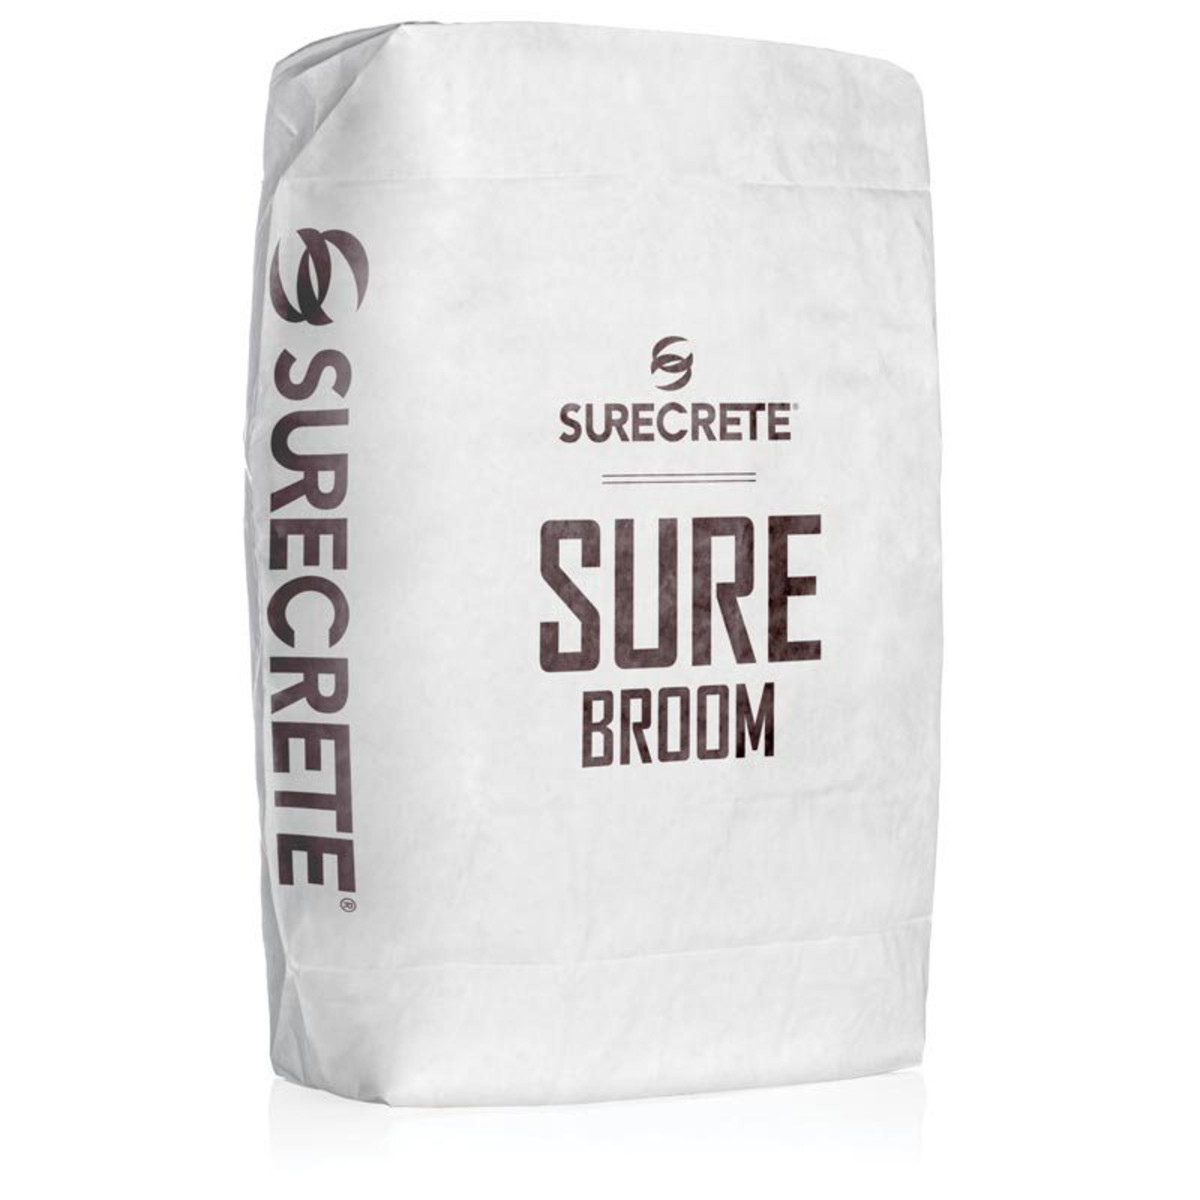 SureBroom Concrete Overlay by Surecrete